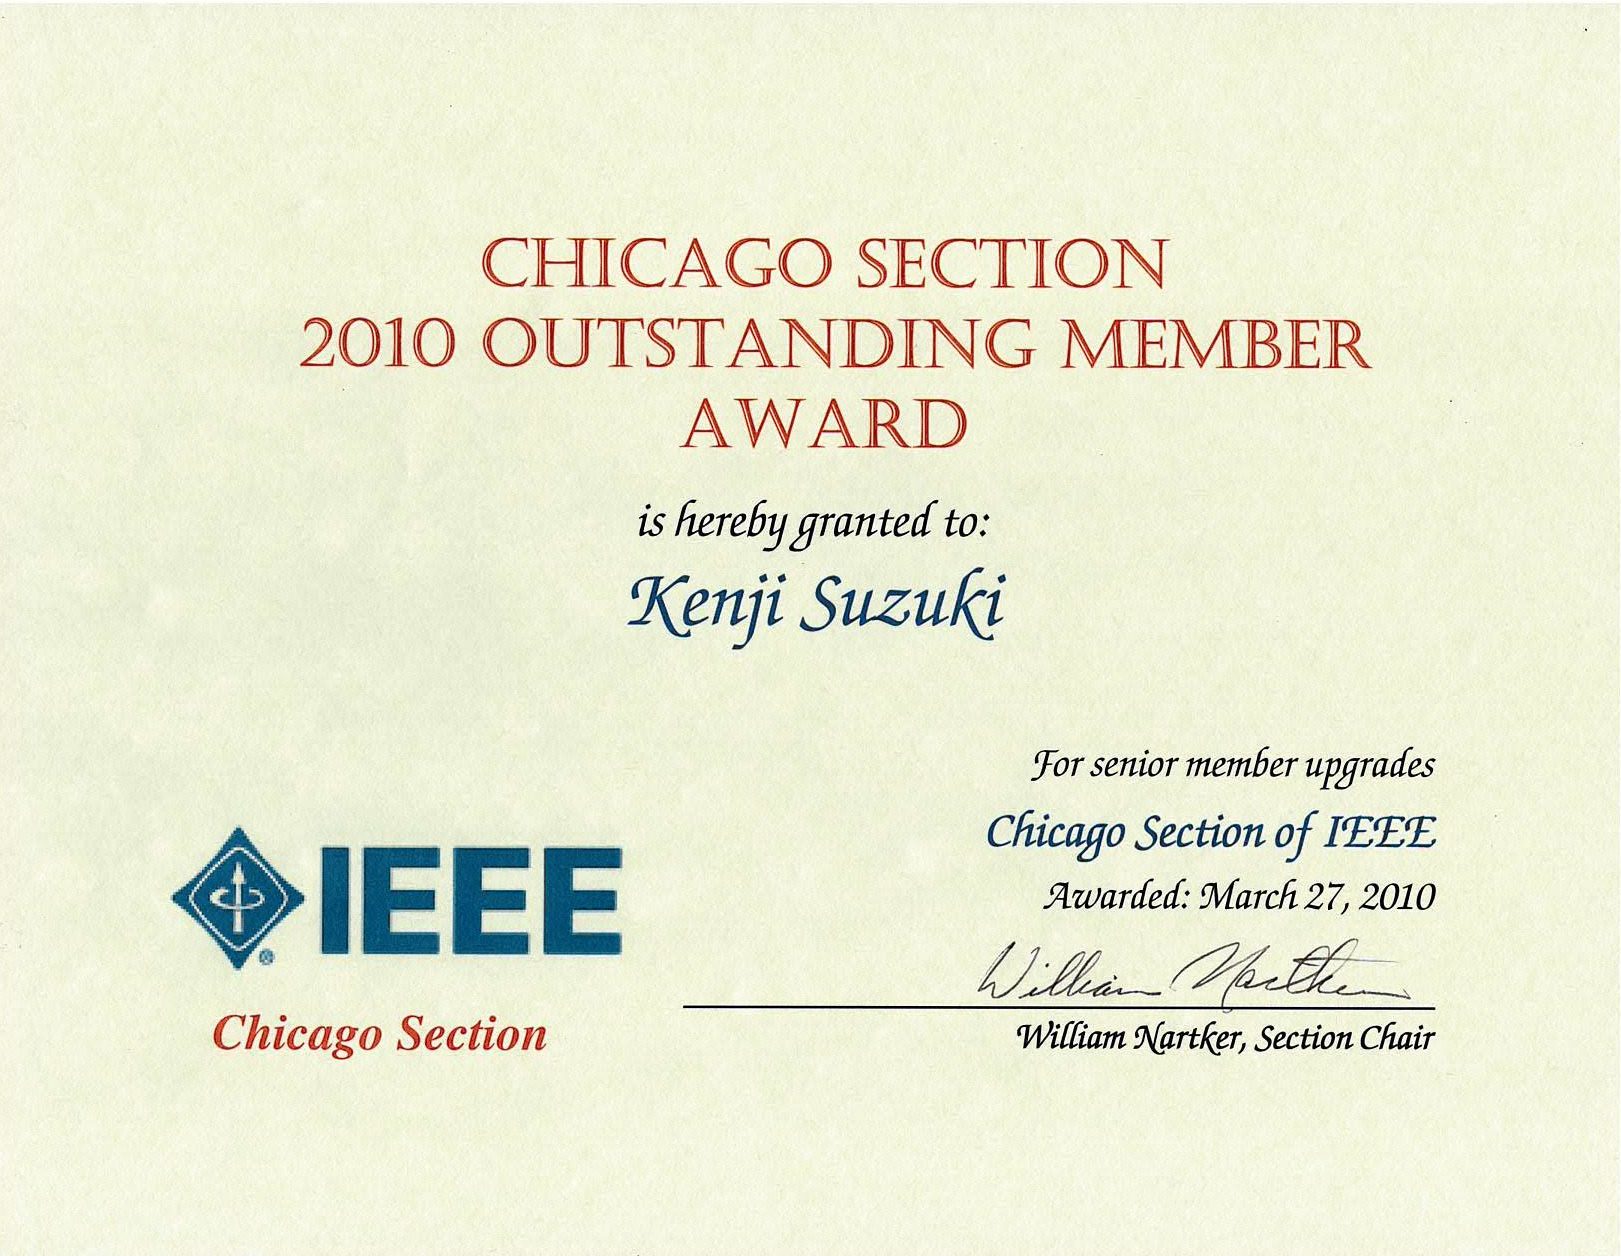 Dr. Suzuki has received IEEE 2010 Outstanding Member Award